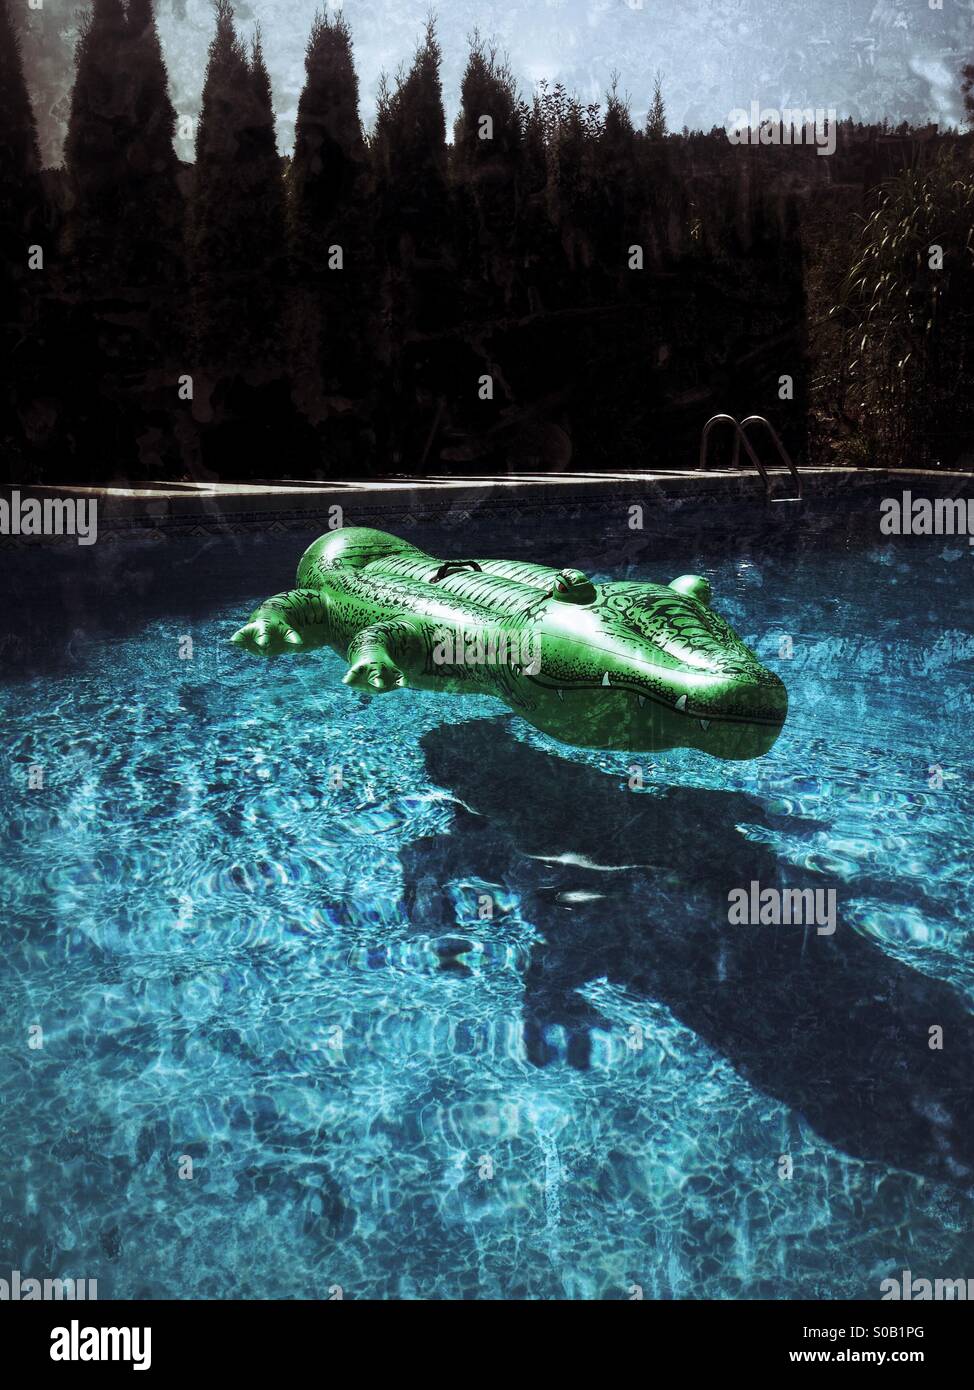 Green alligator pool toy floating in backyard pool. Distressed look. Stock Photo